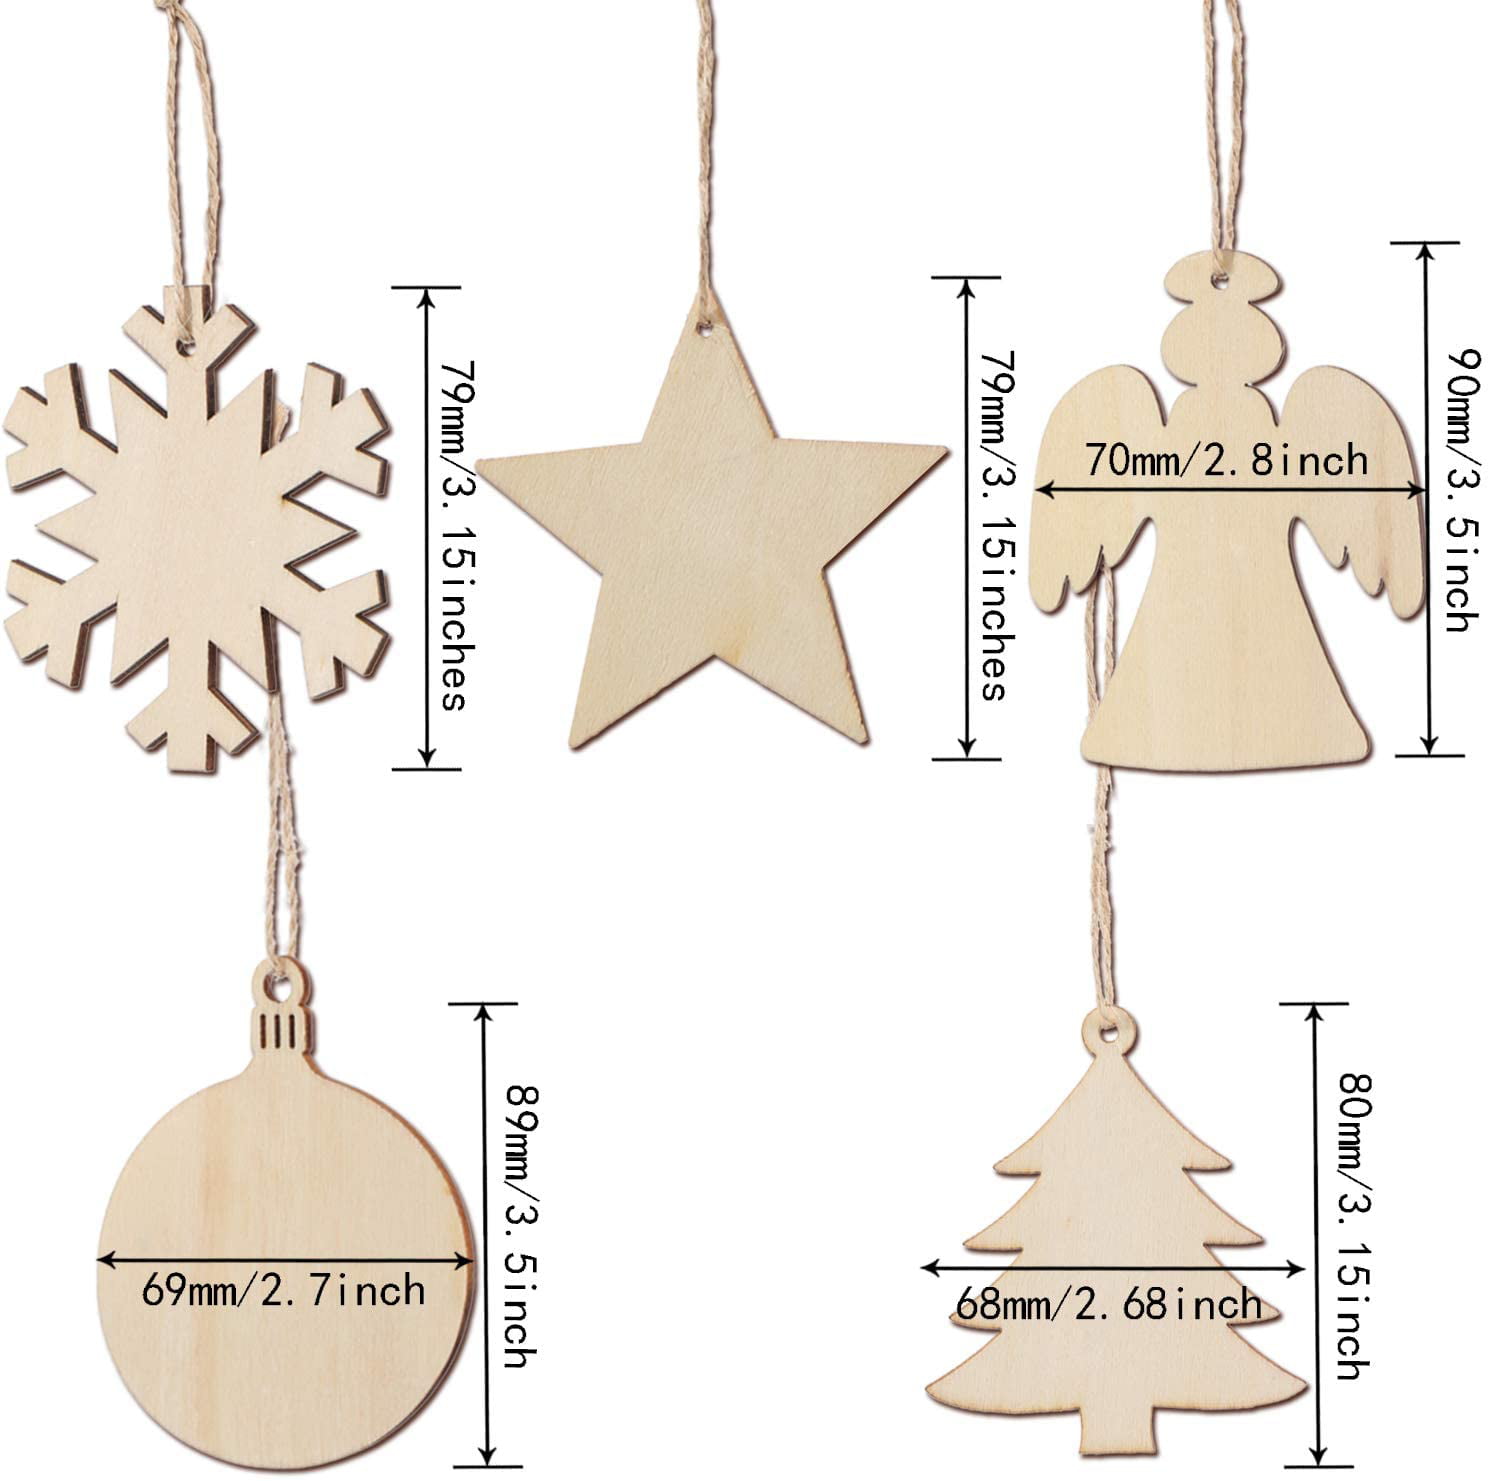  Homoyoyo 5pcs Wooden Christmas Ornaments Wood Slices